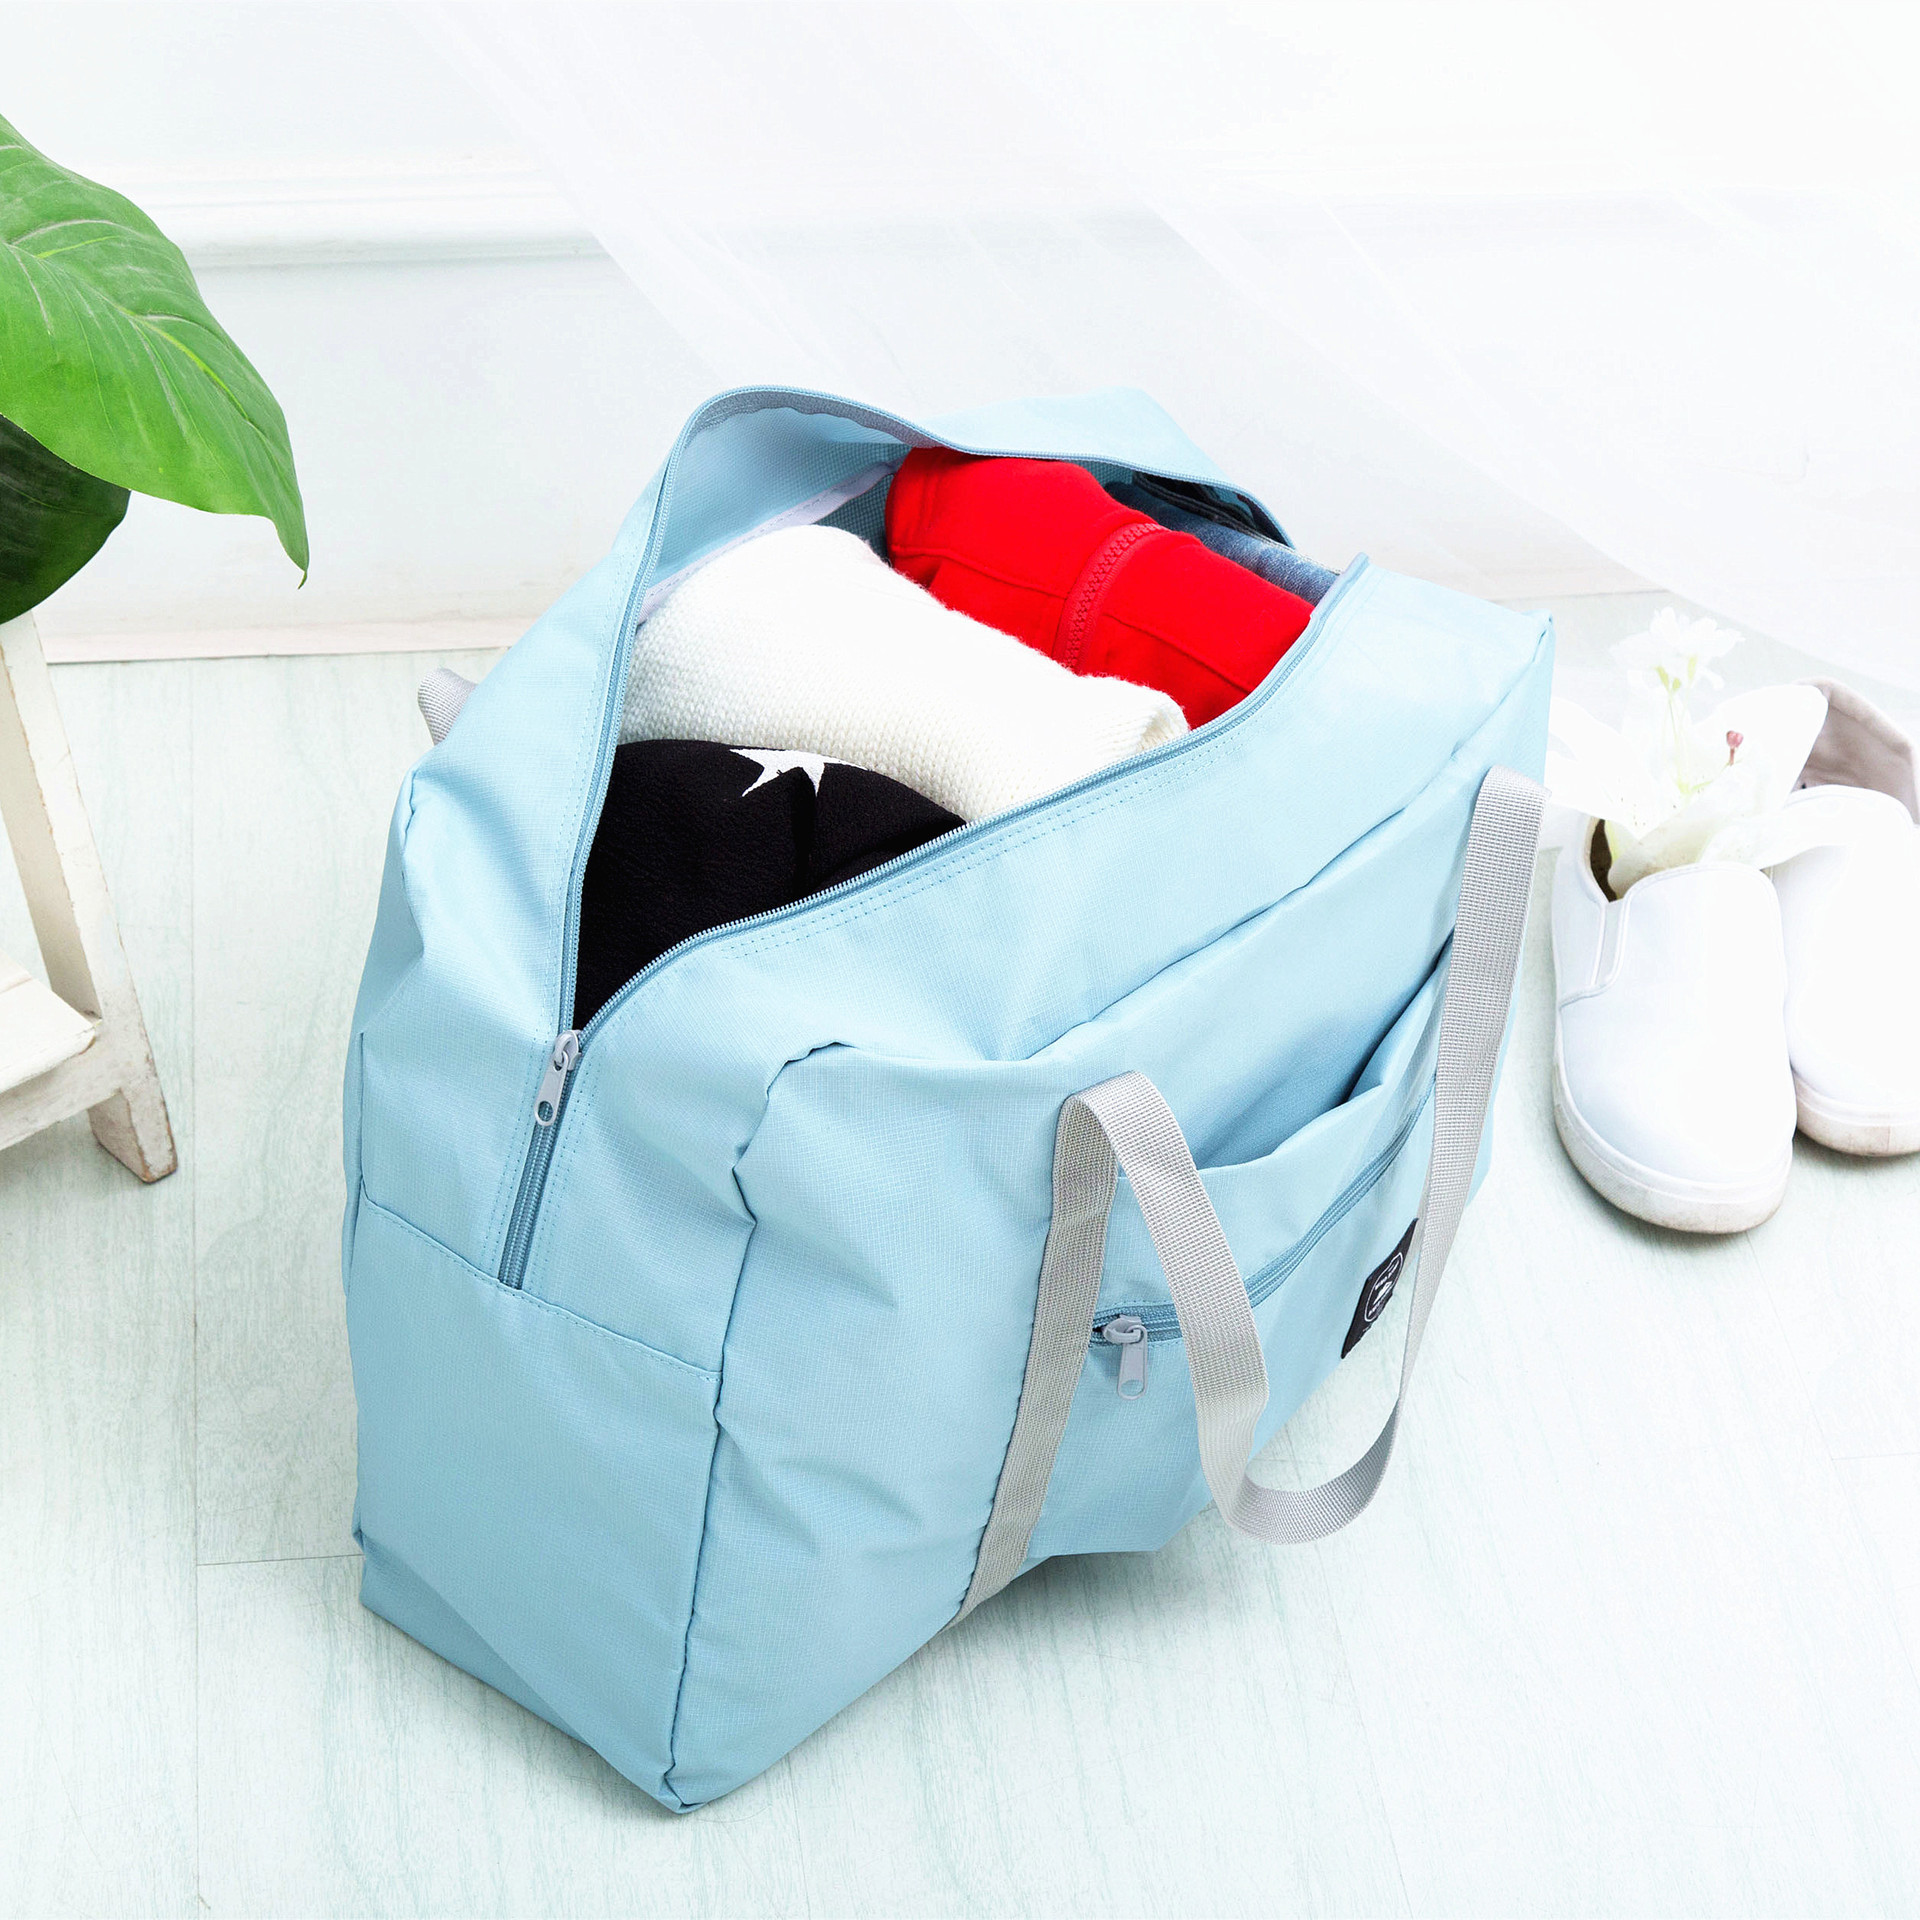 Folding Travel Bag Nylon Travel Bags Hand Luggage for Men & Women Fashion Travel Duffle Bags Tote Large Handbags Duffel